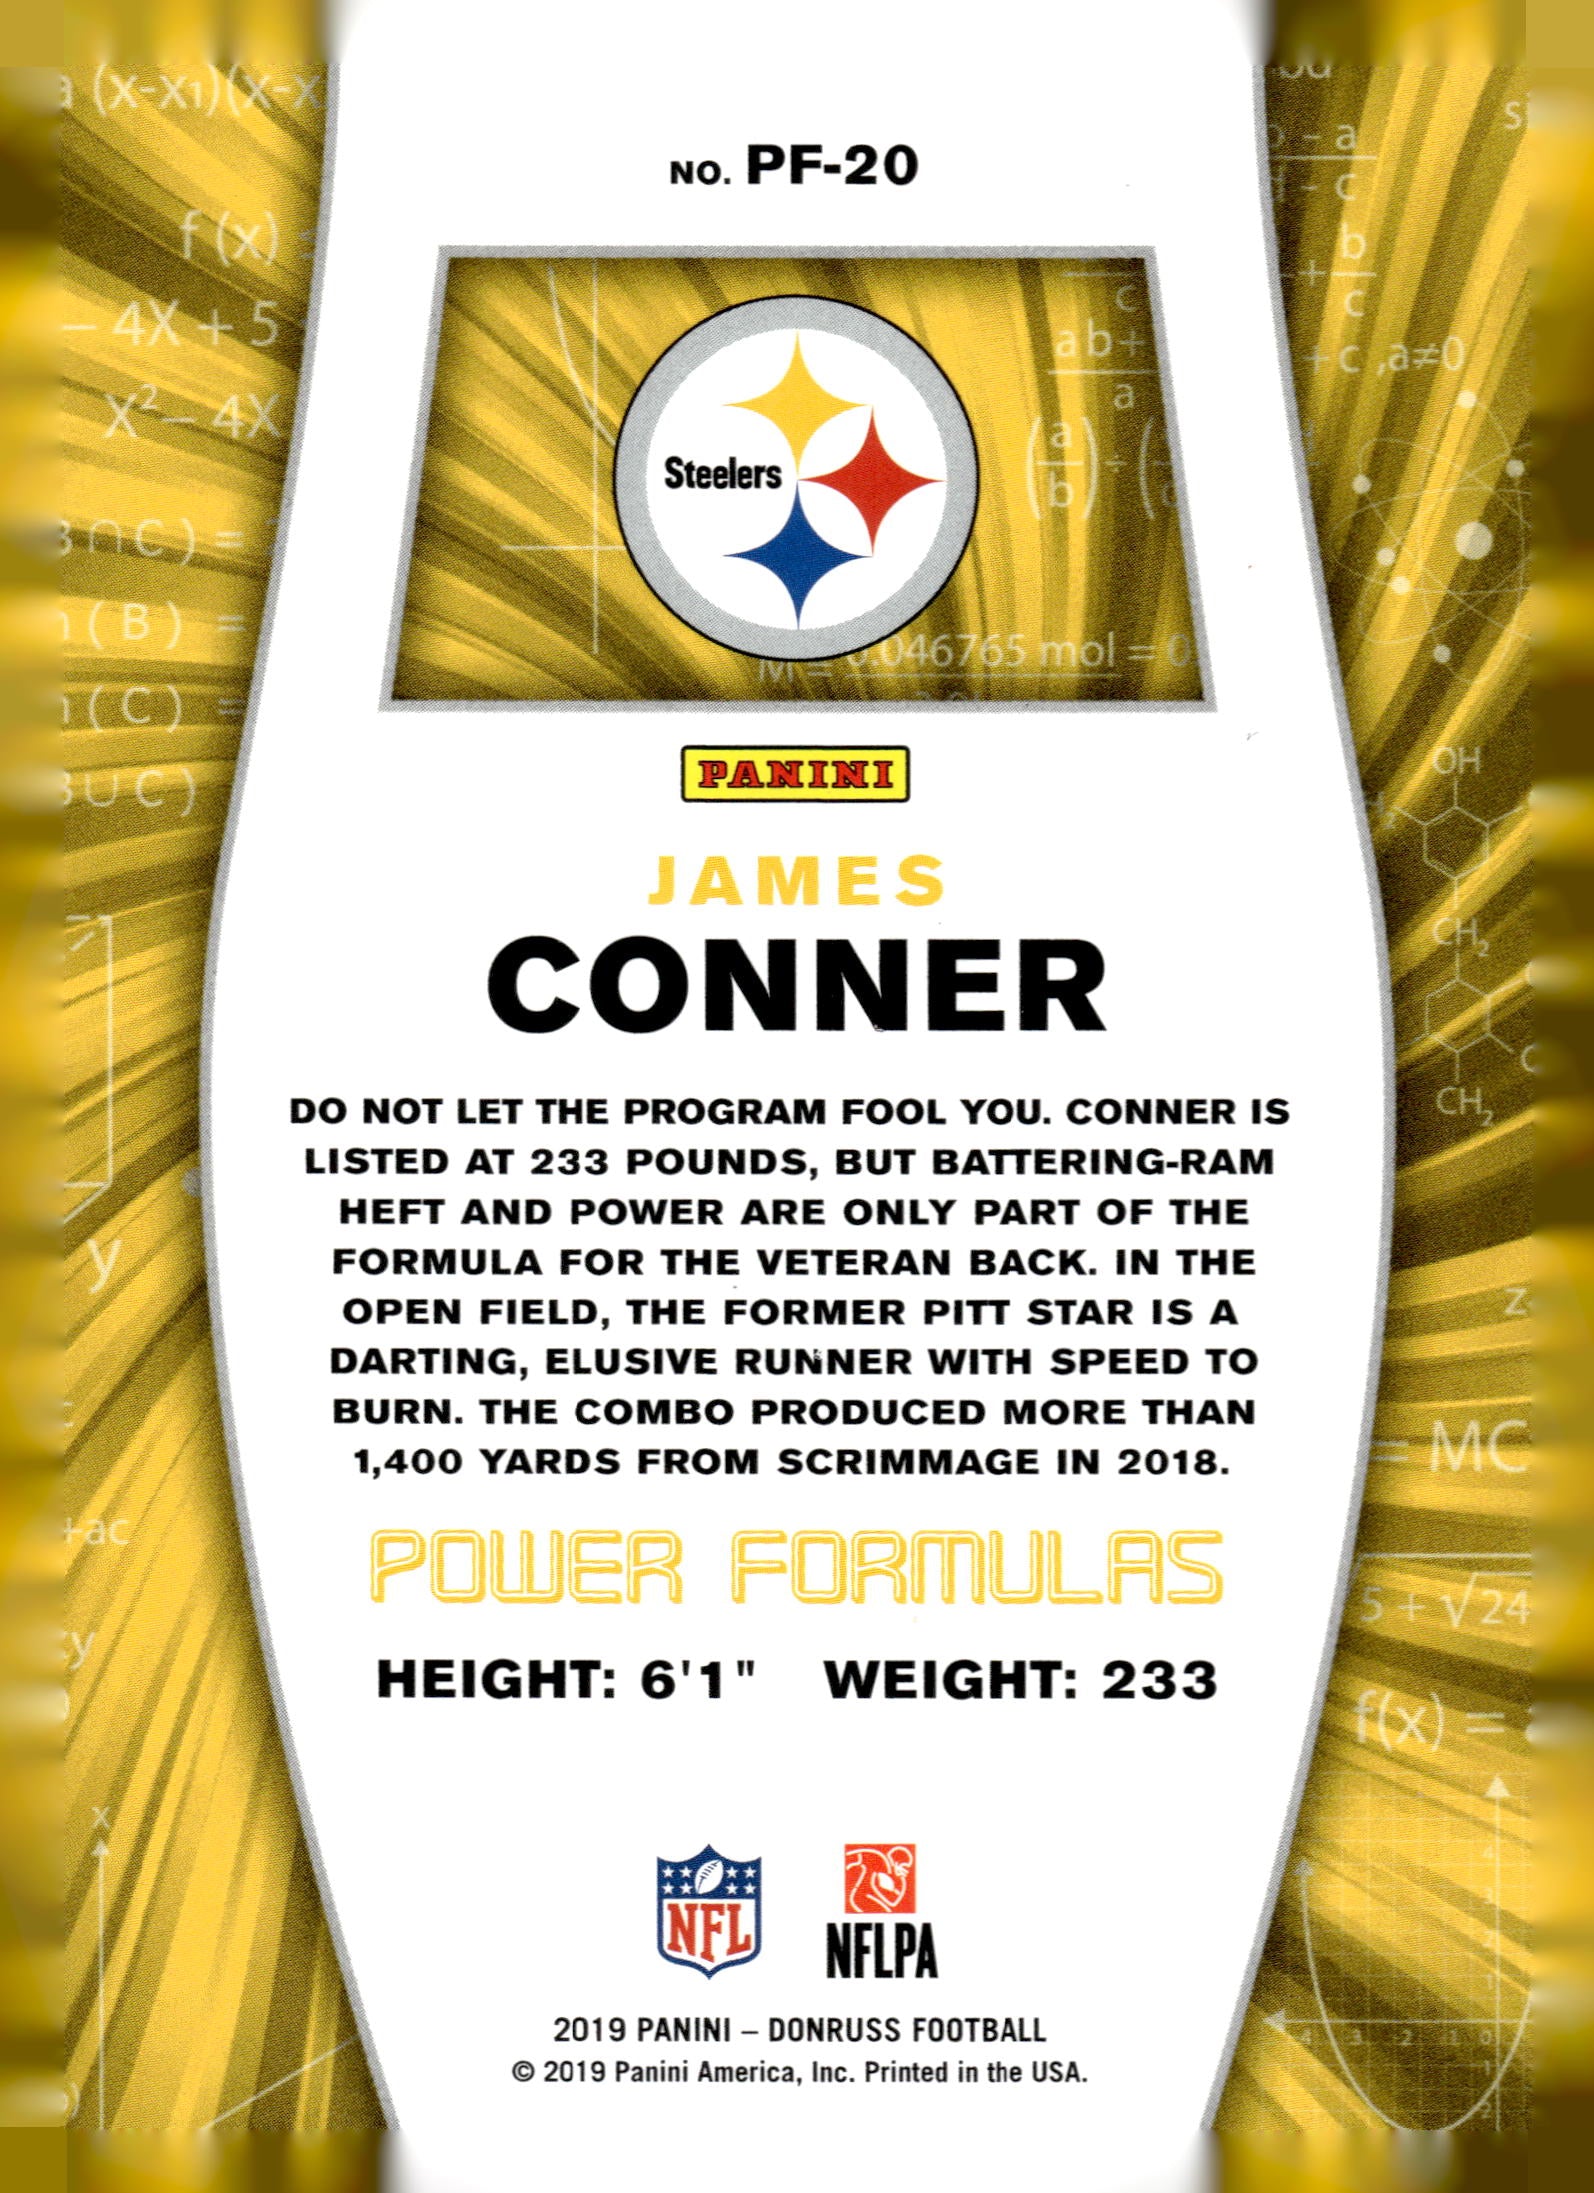 2019 Donruss #PF-20 James Conner Power Formulas